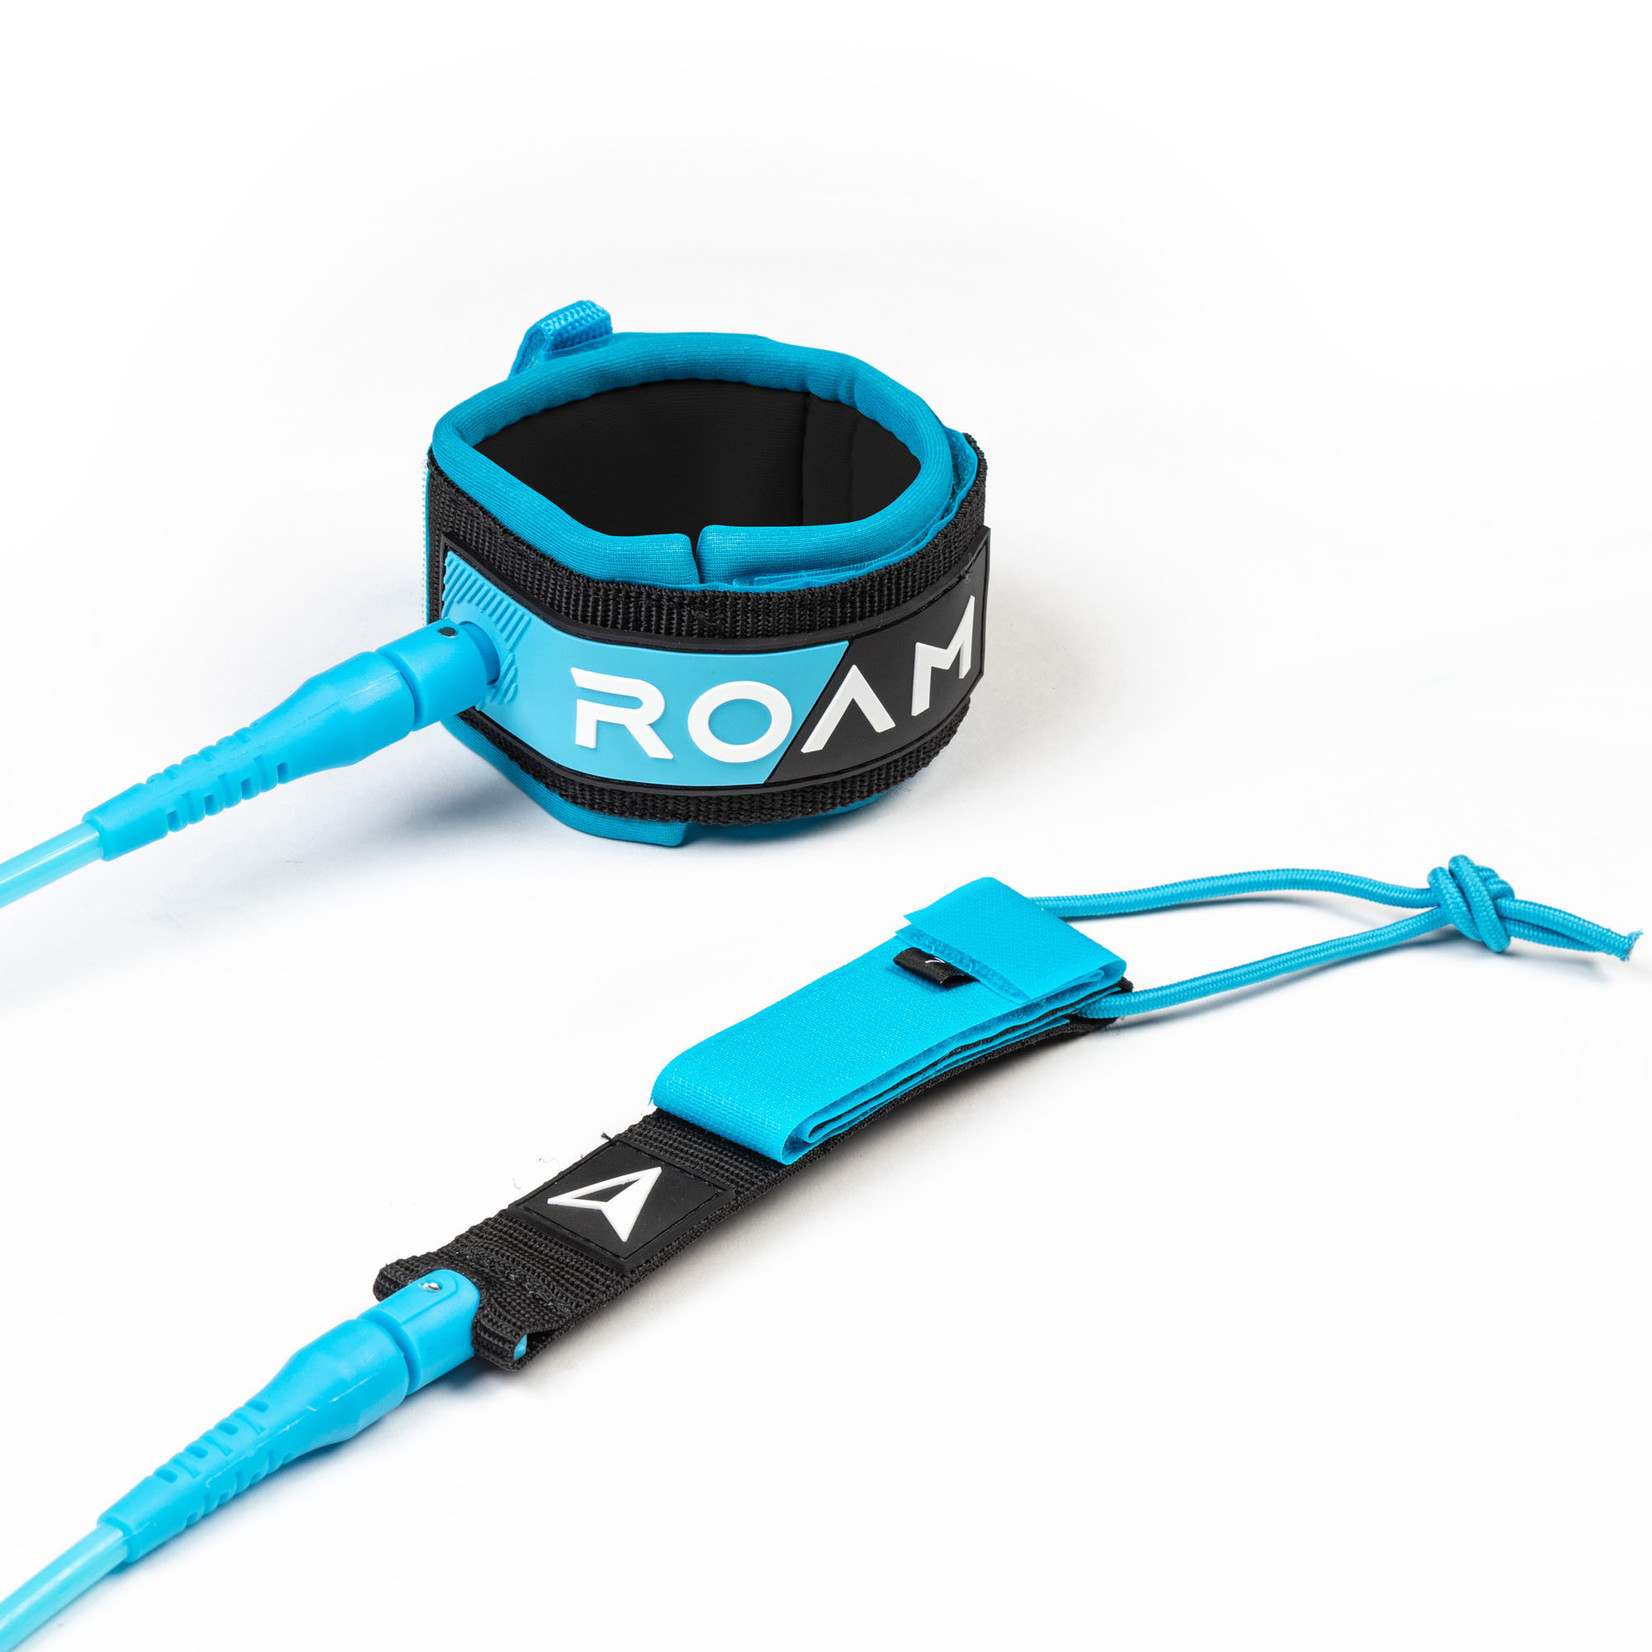 Roam ROAM Premium Double Swivel Surf Leash 7'.